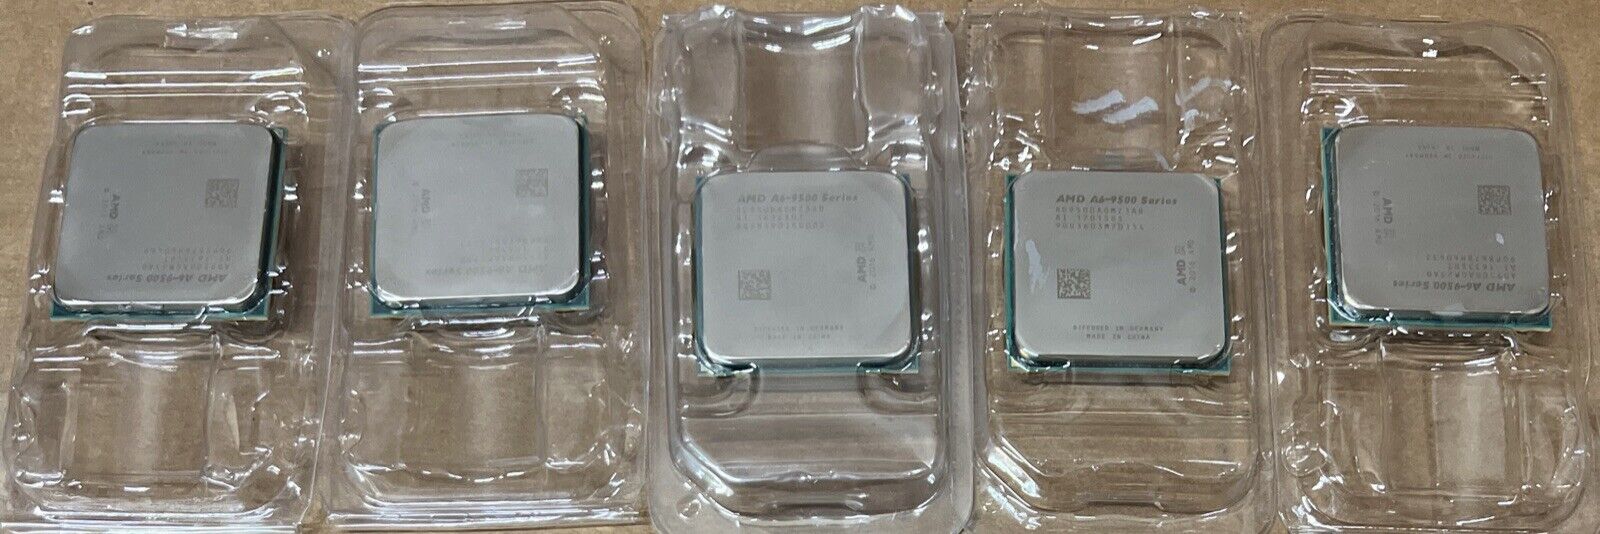 Lot of 5 AMD A6-Series A6-9500 3.5GHz AM4 AD9500AGM23AB Desktop